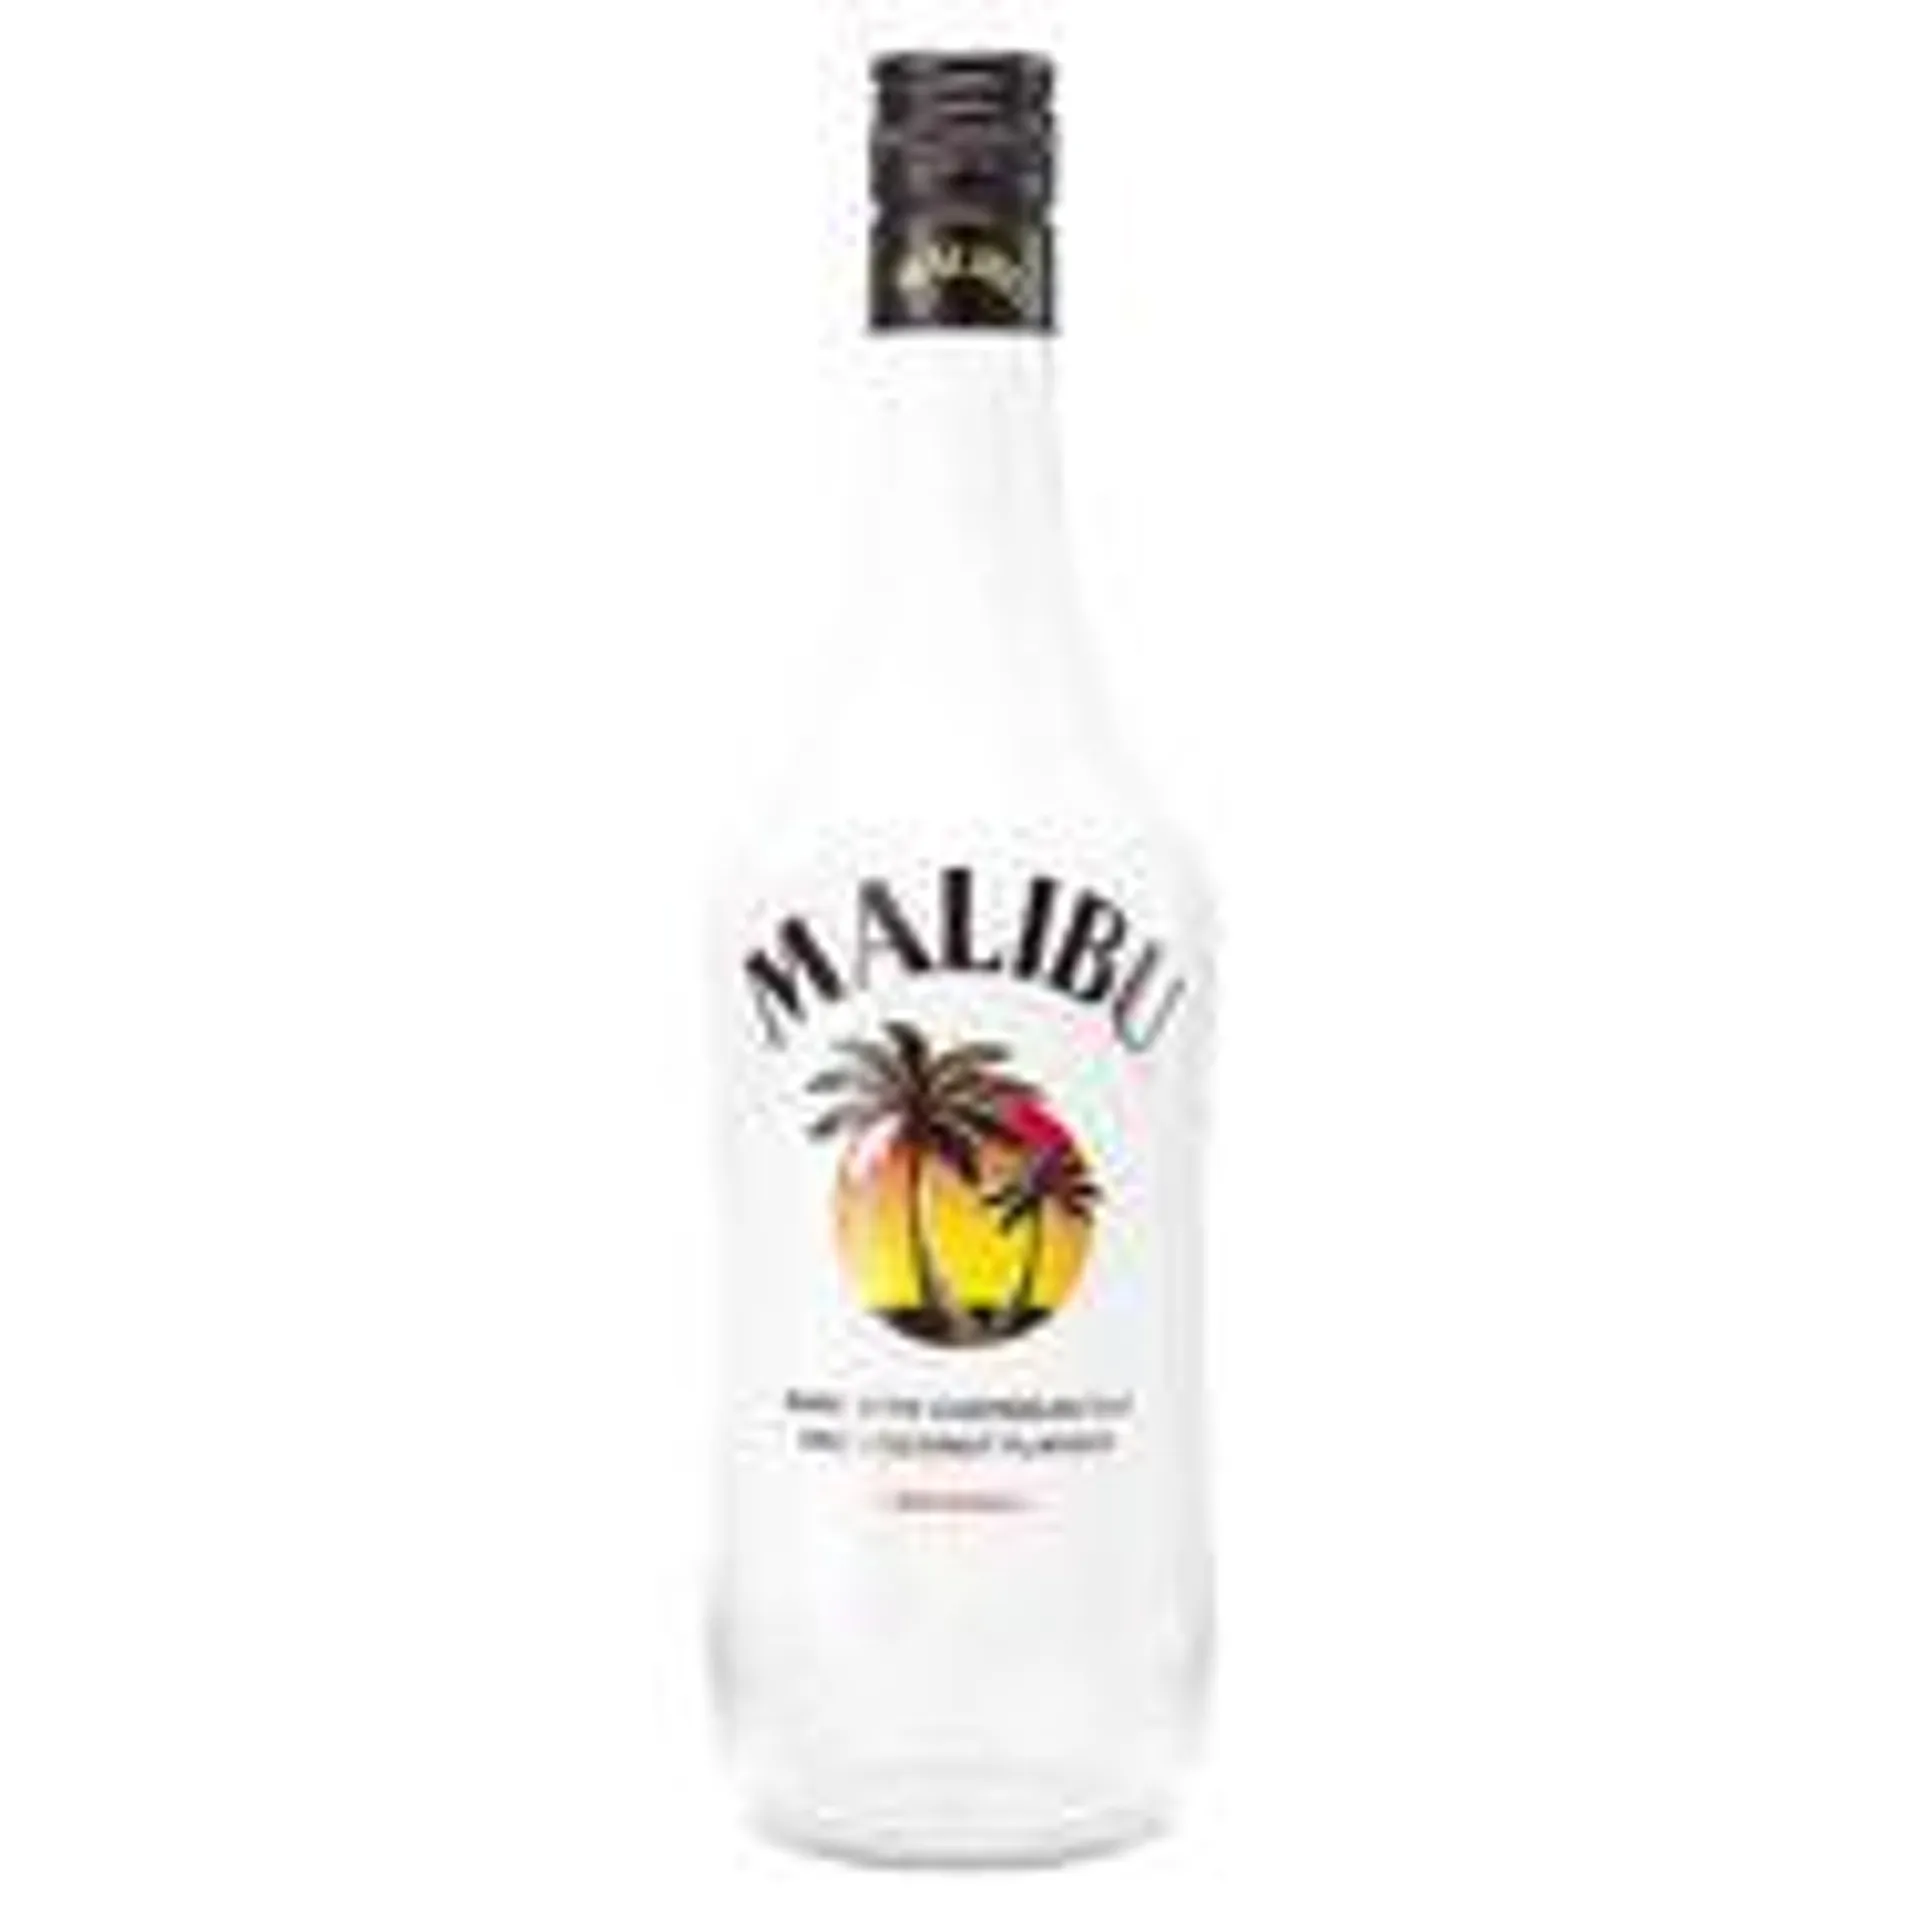 Malibu Original Caribbean White Rum with Coconut Flavour